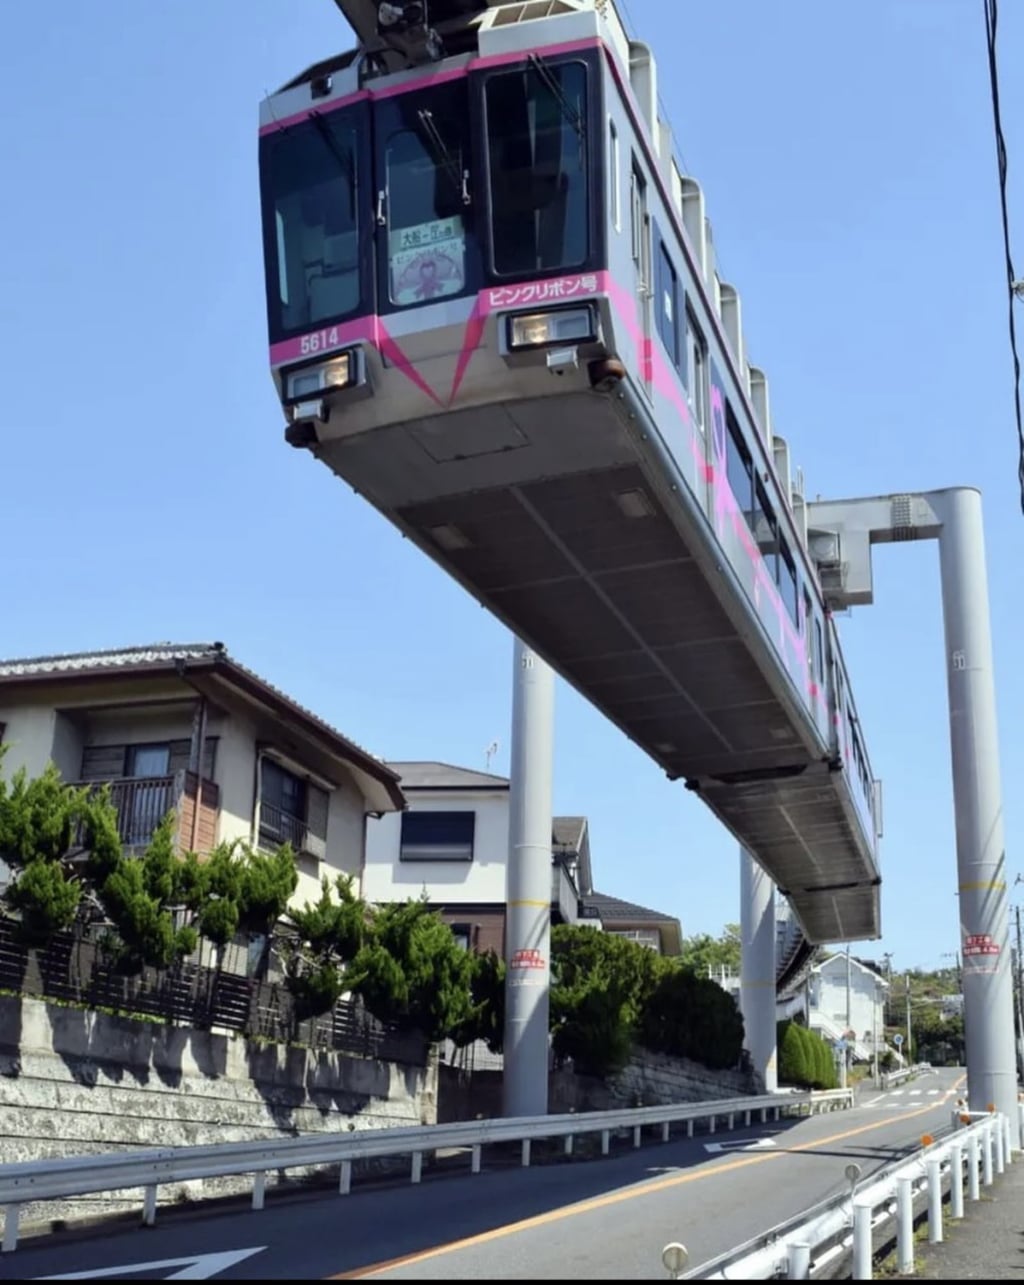 Monorail in Japan